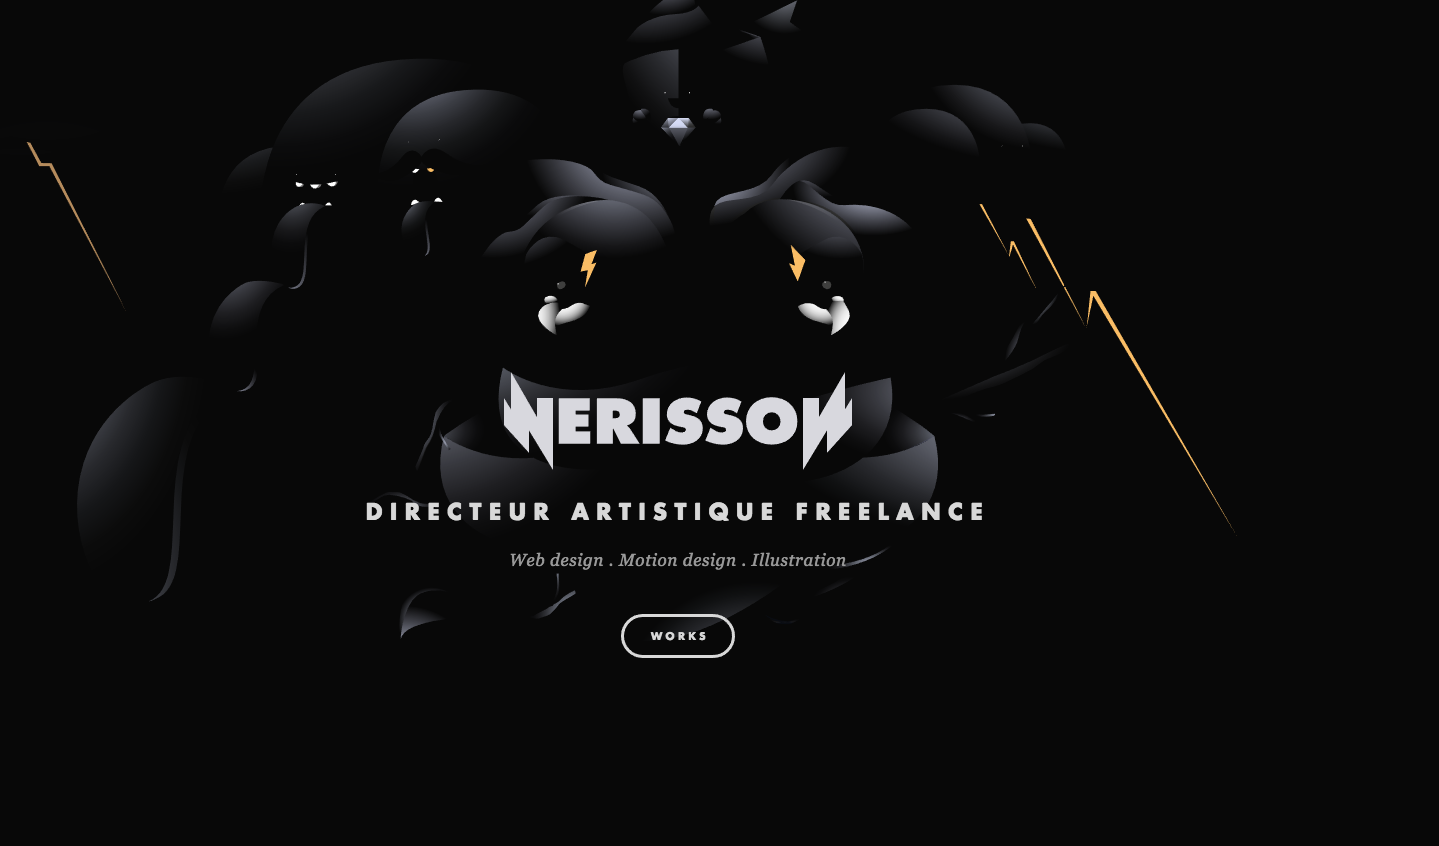 Nerisson